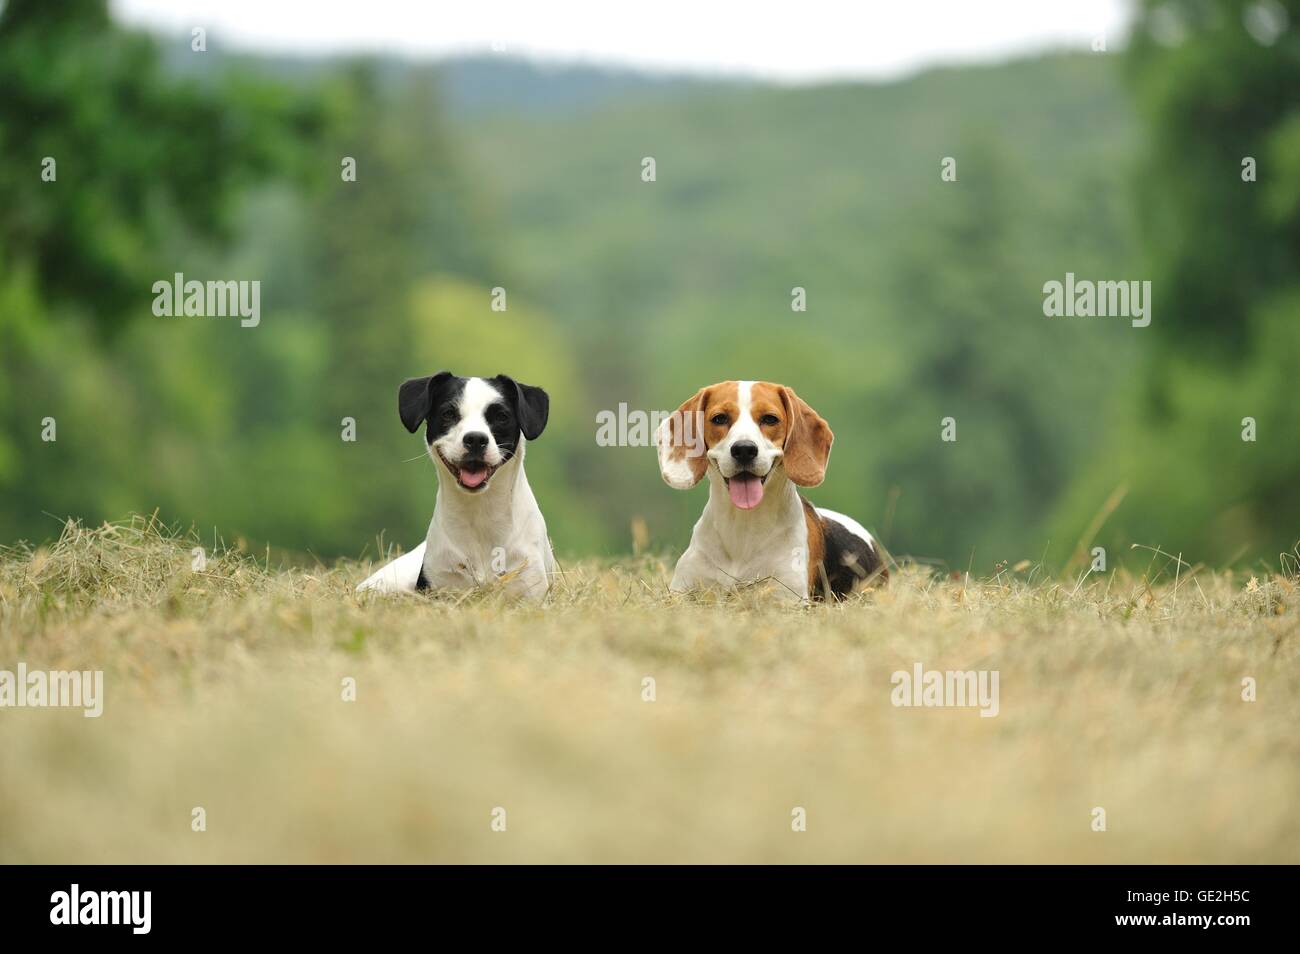 2 dogs Stock Photo